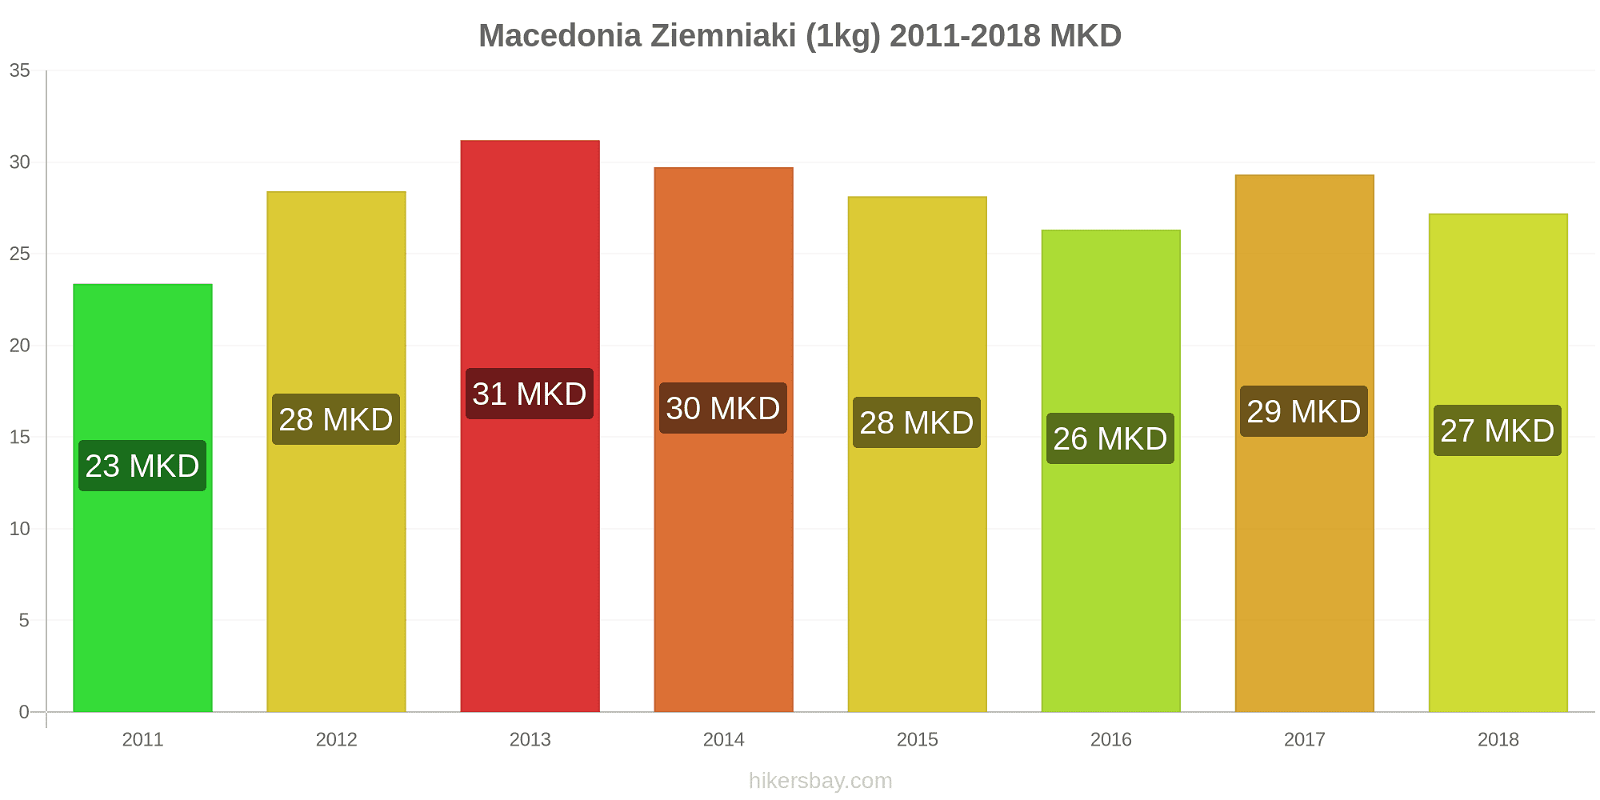 Macedonia zmiany cen Ziemniaki (1kg) hikersbay.com